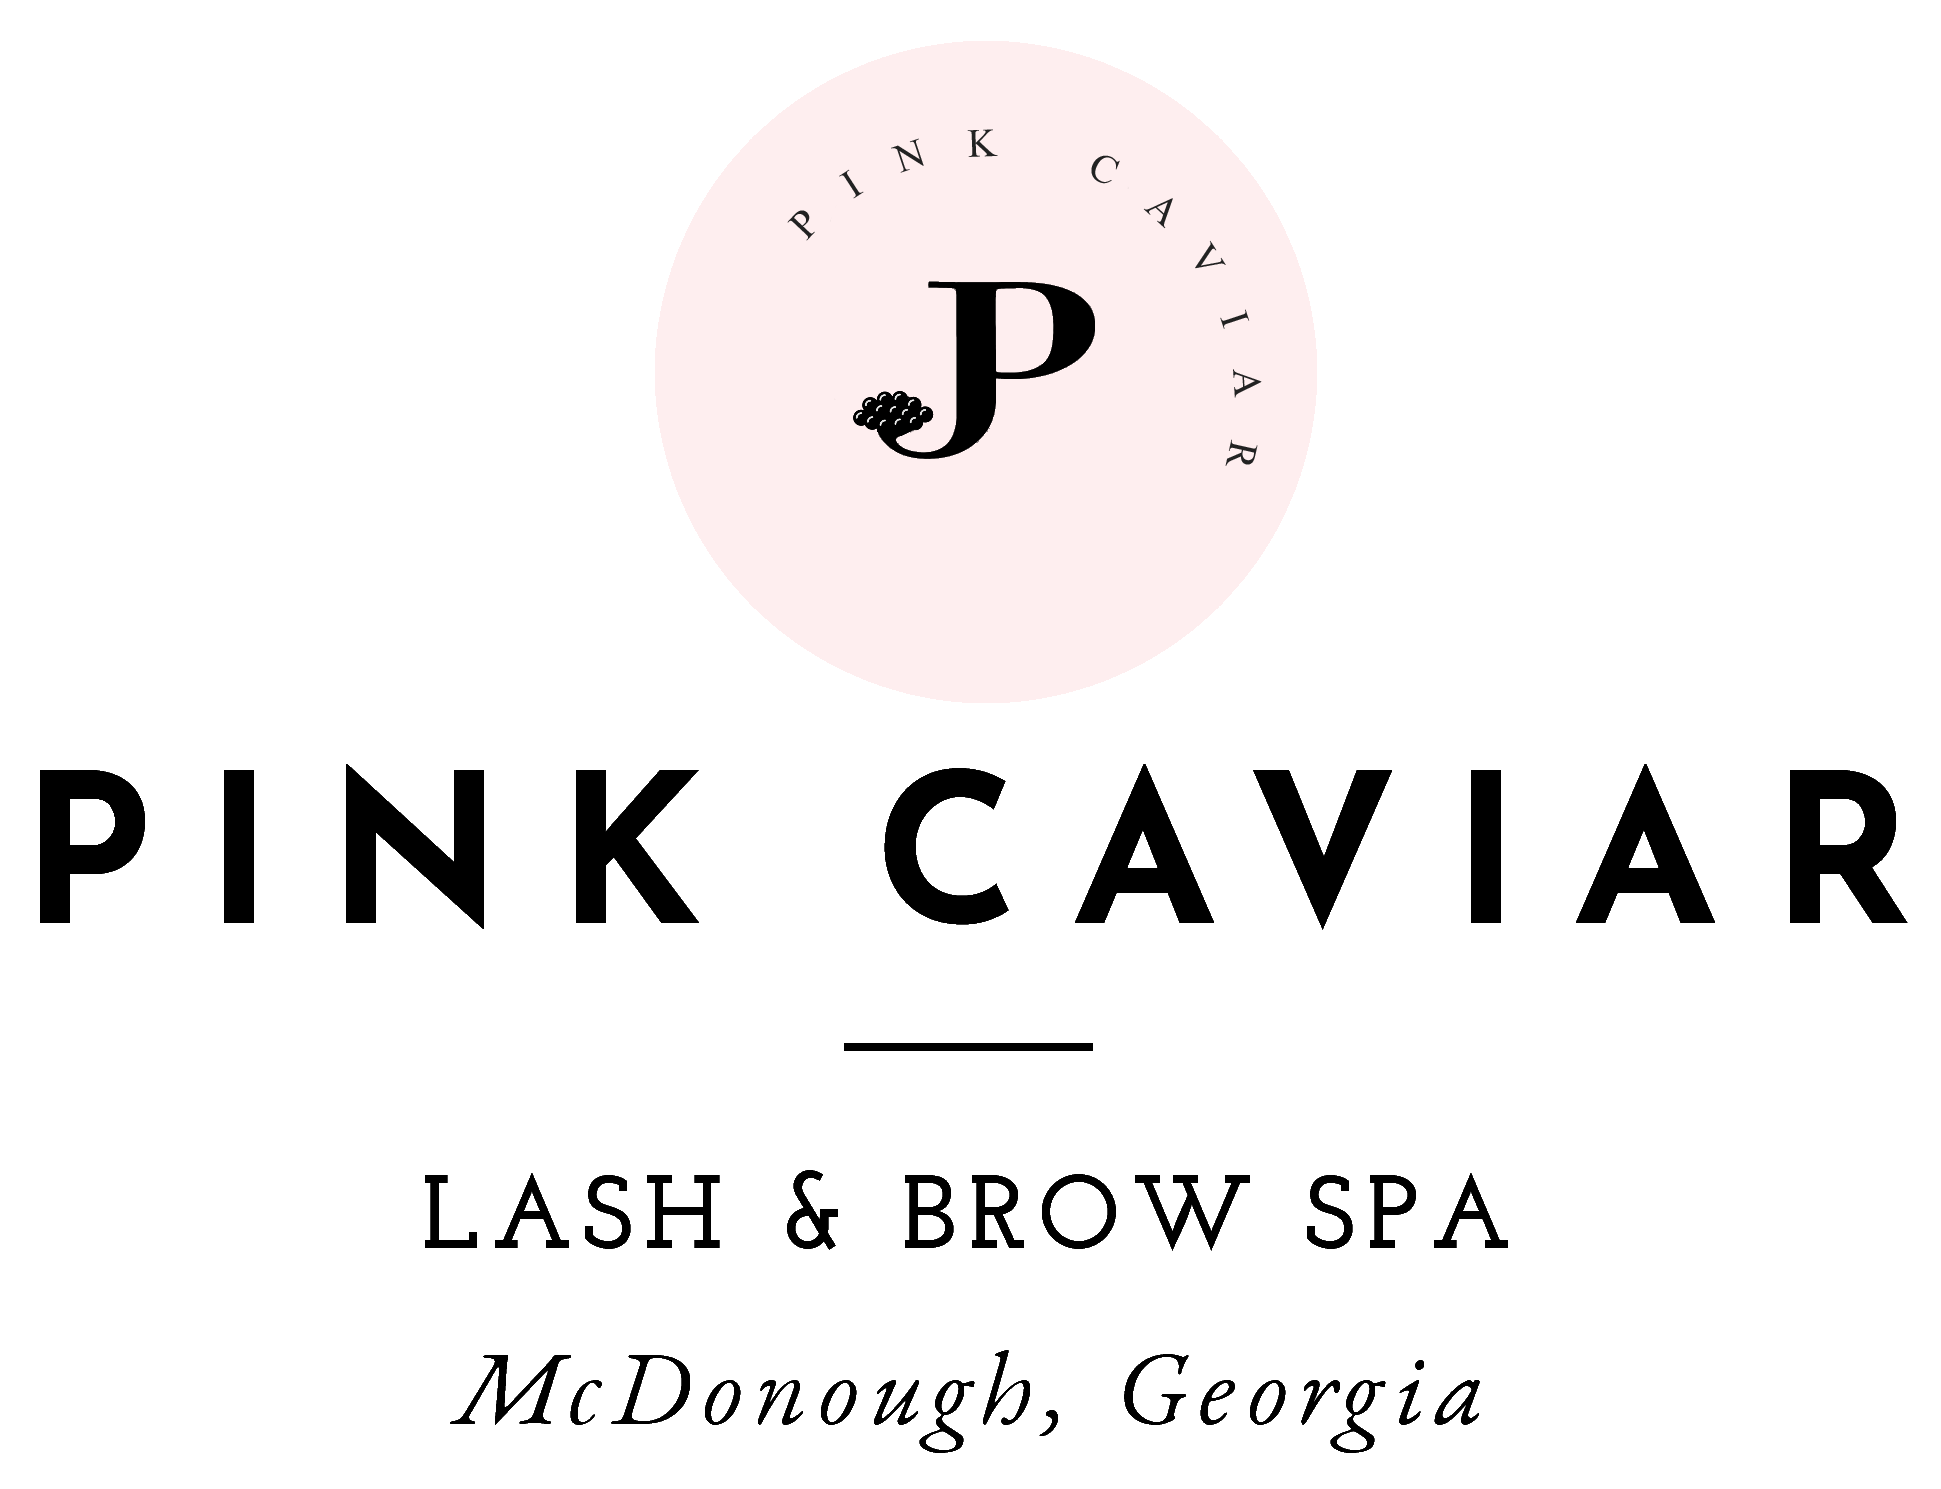 Pink Caviar Lash & Brow Spa